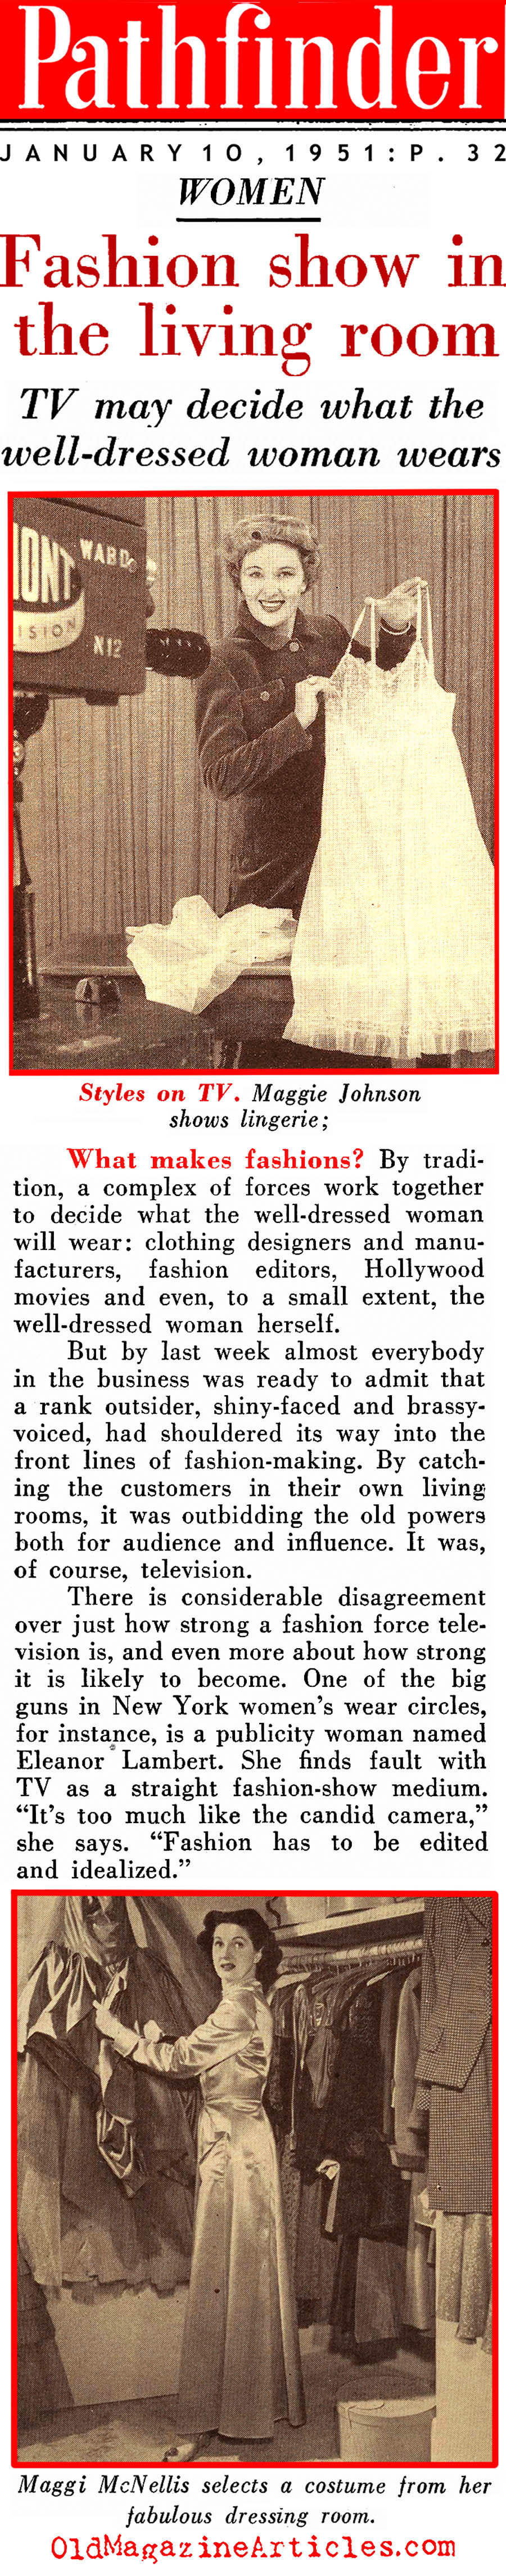 Shopping from Television (Pathfinder Magazine, 1951)